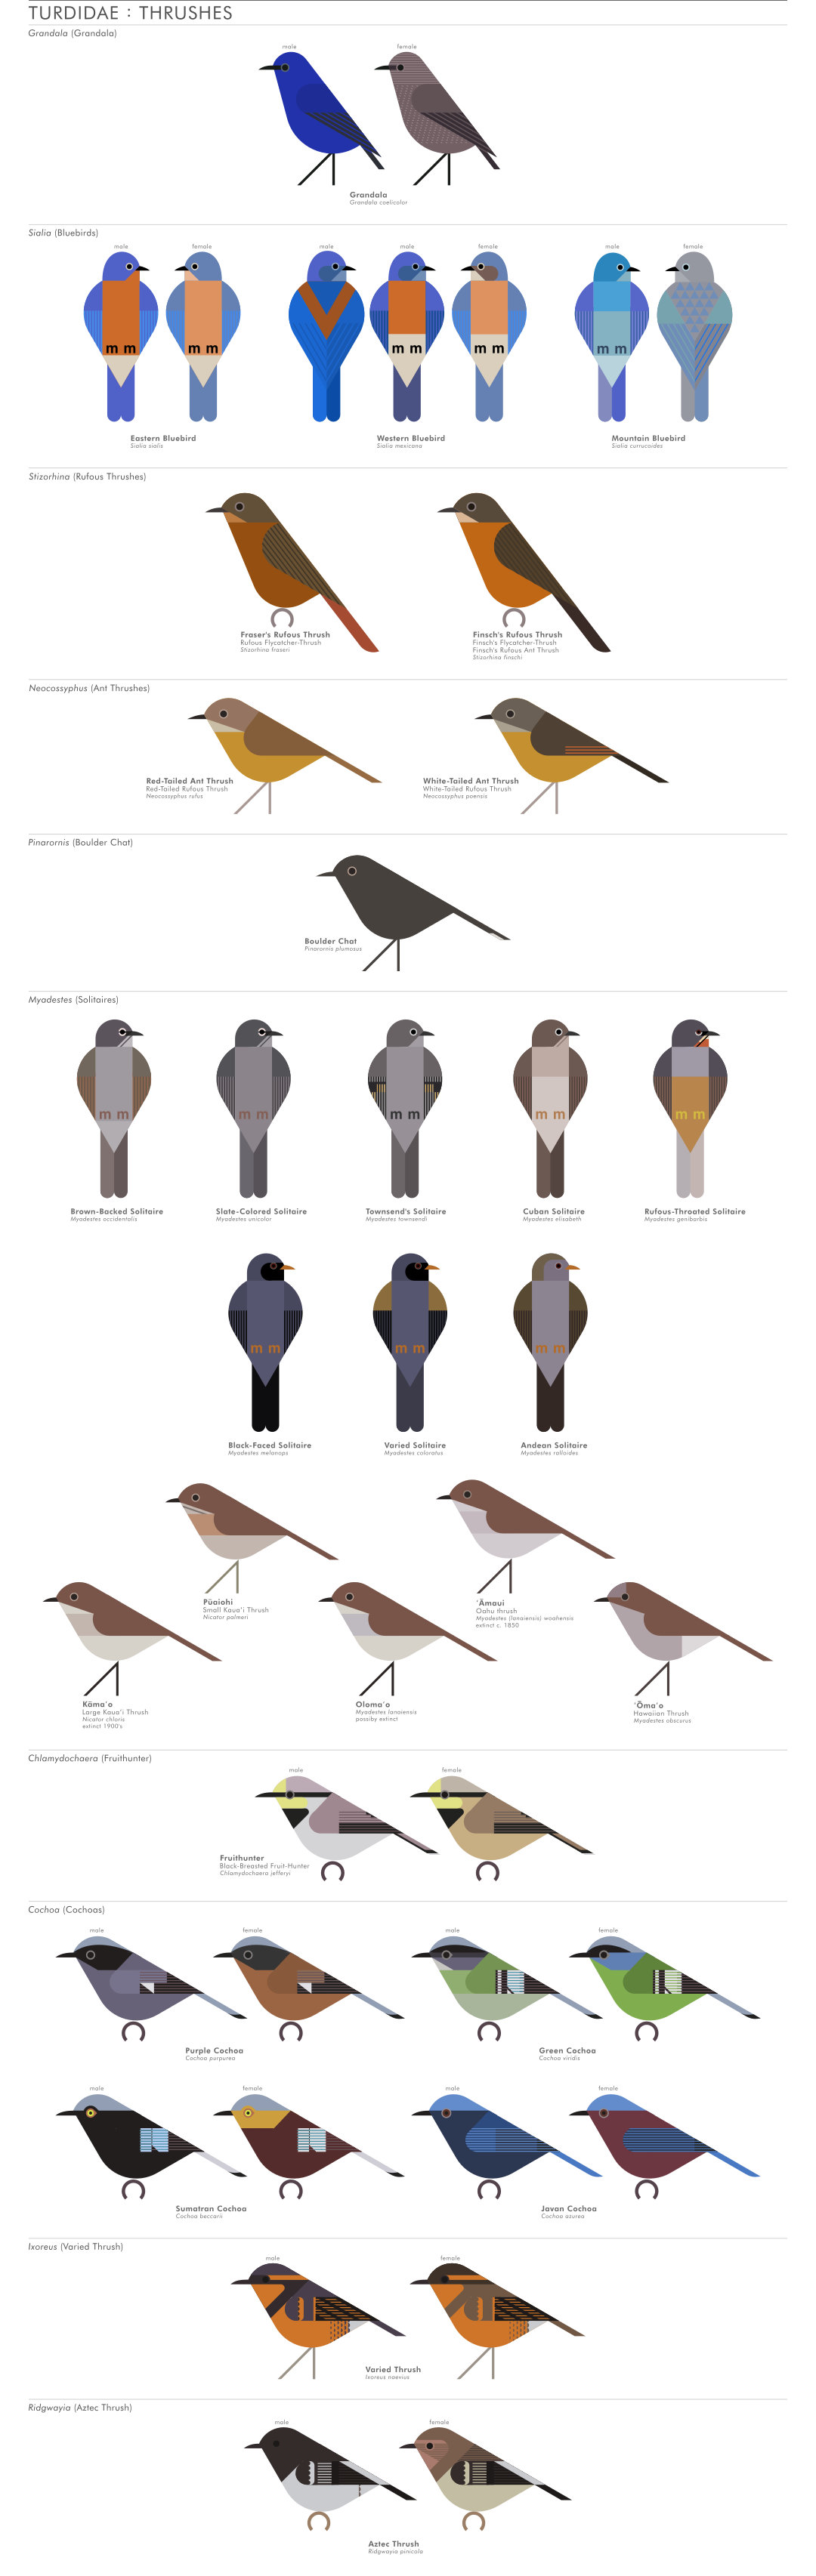 scott partridge - AVE - avian vector encyclopedia - thrushes - bird vector art